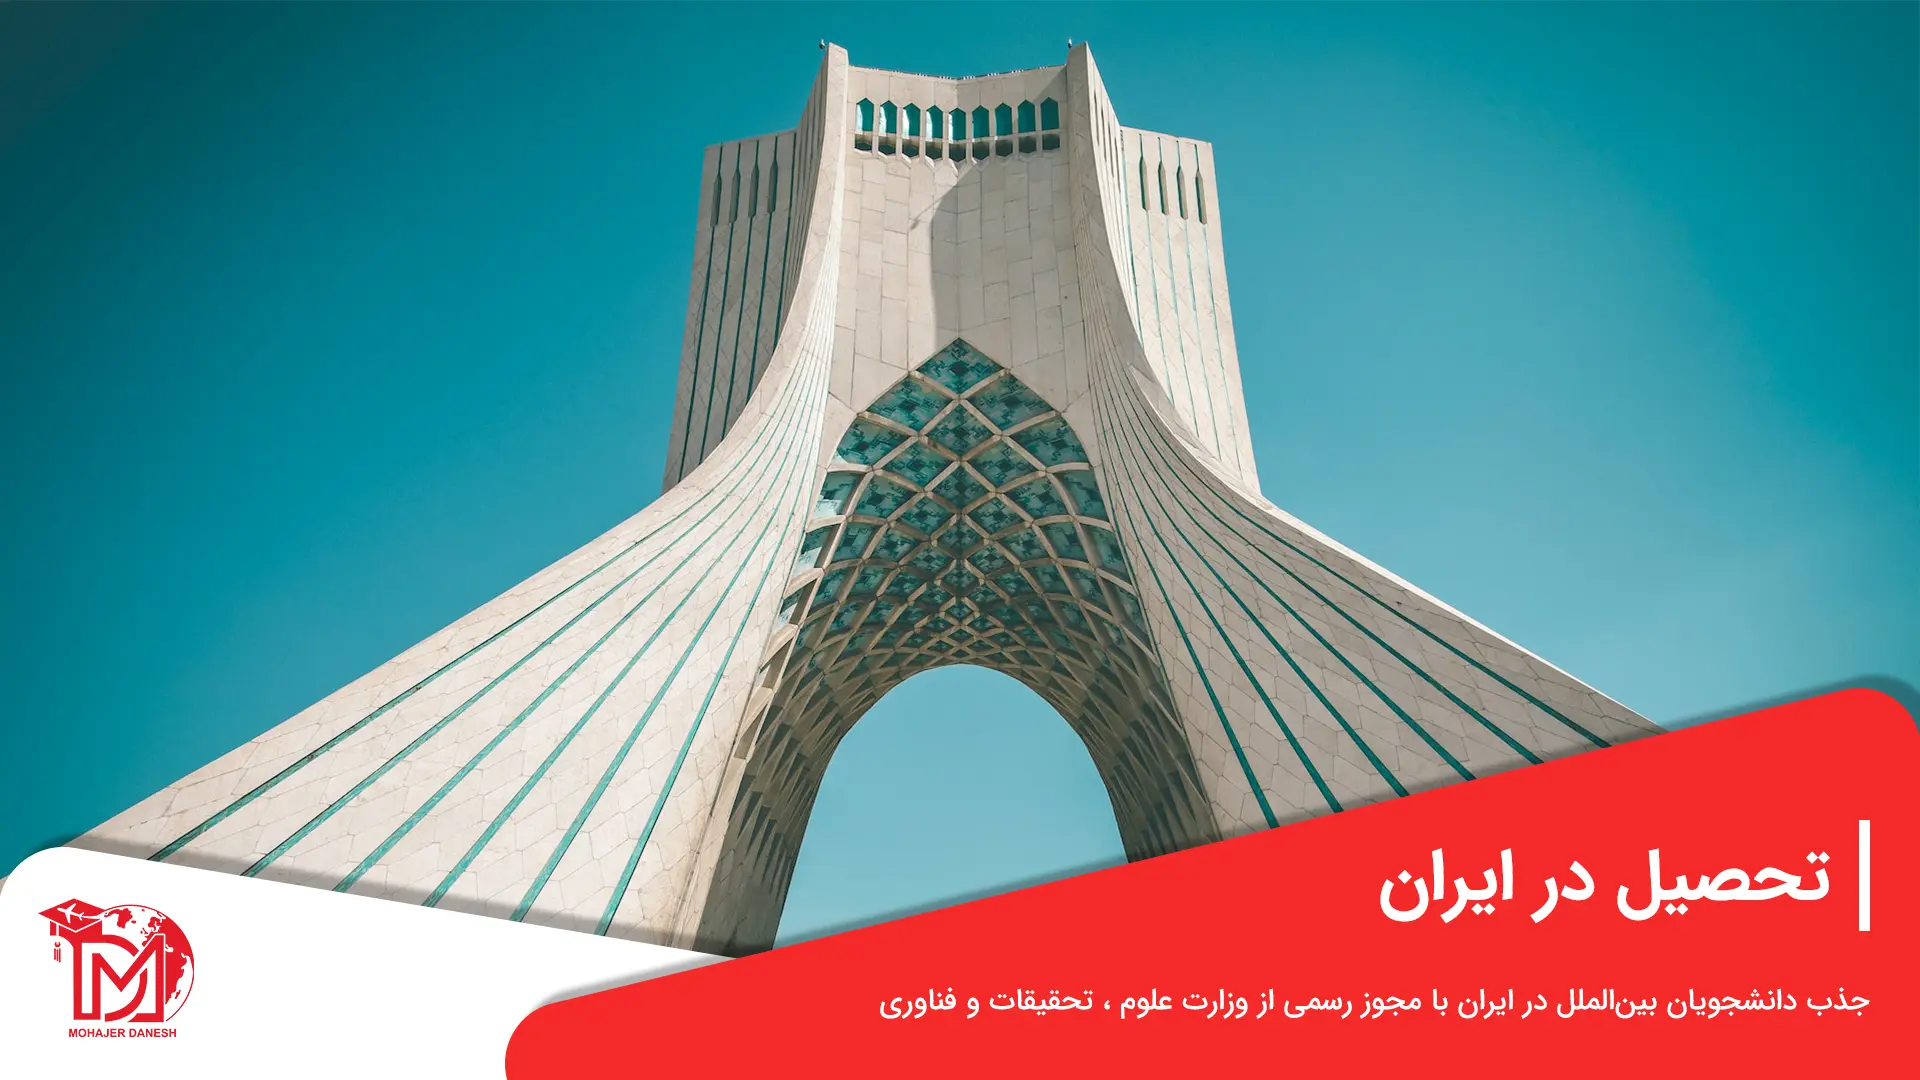 mohajerdanesh study in iran